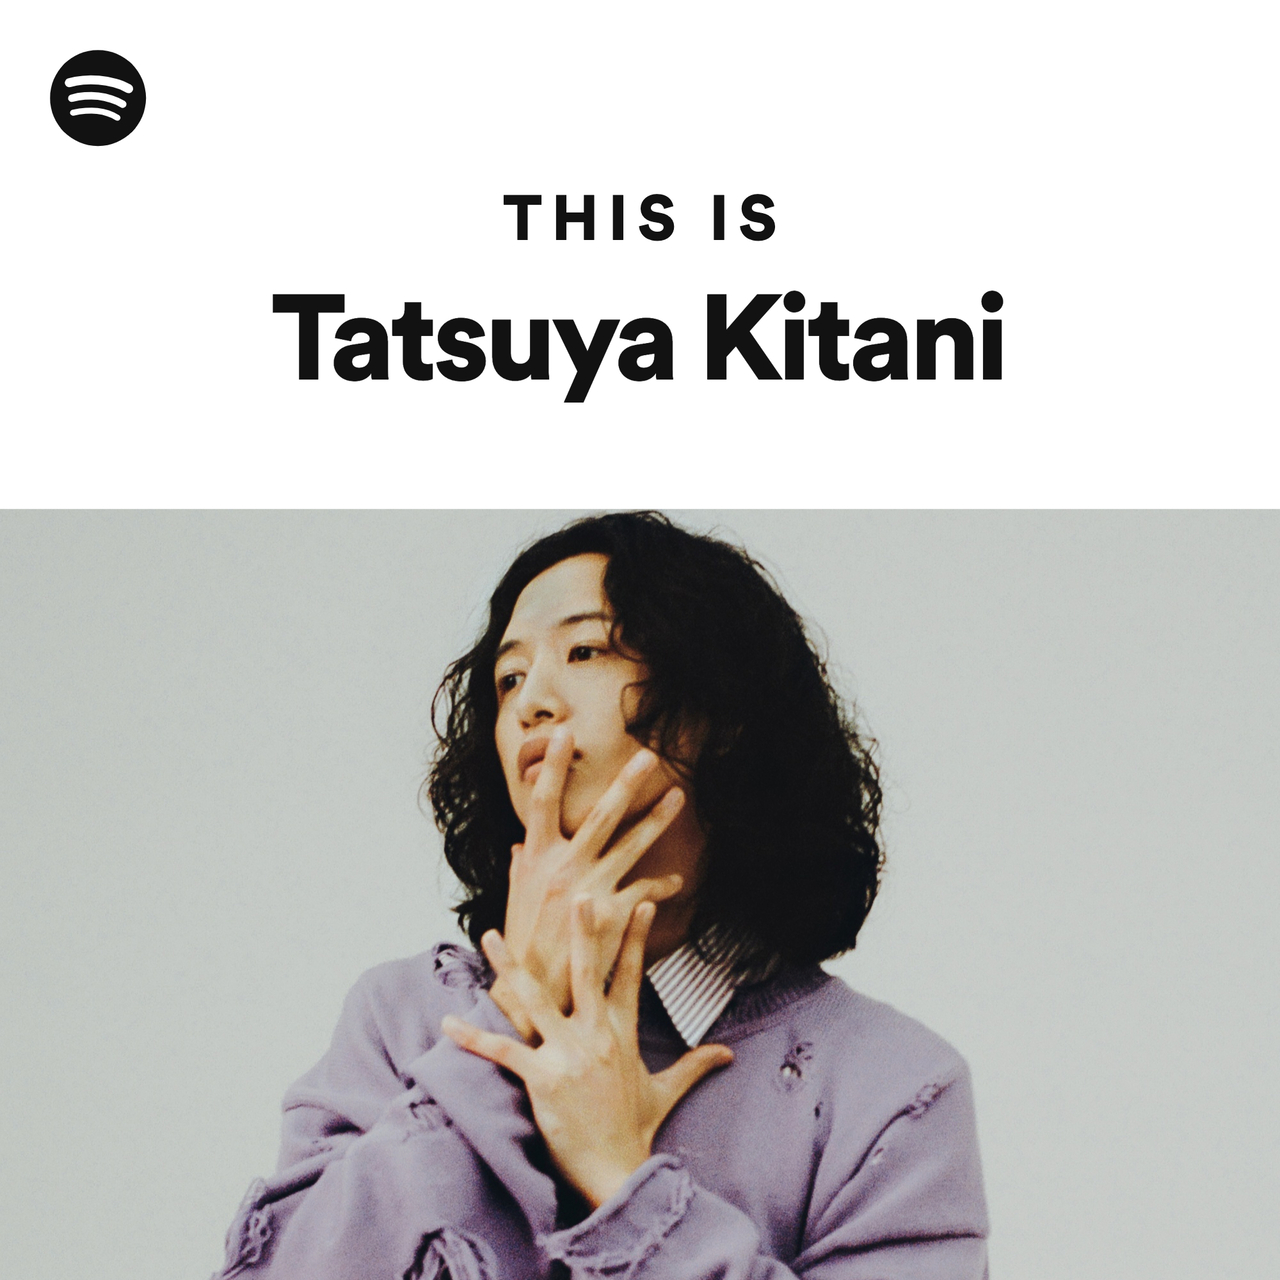 Tatsuya Kitani | Spotify